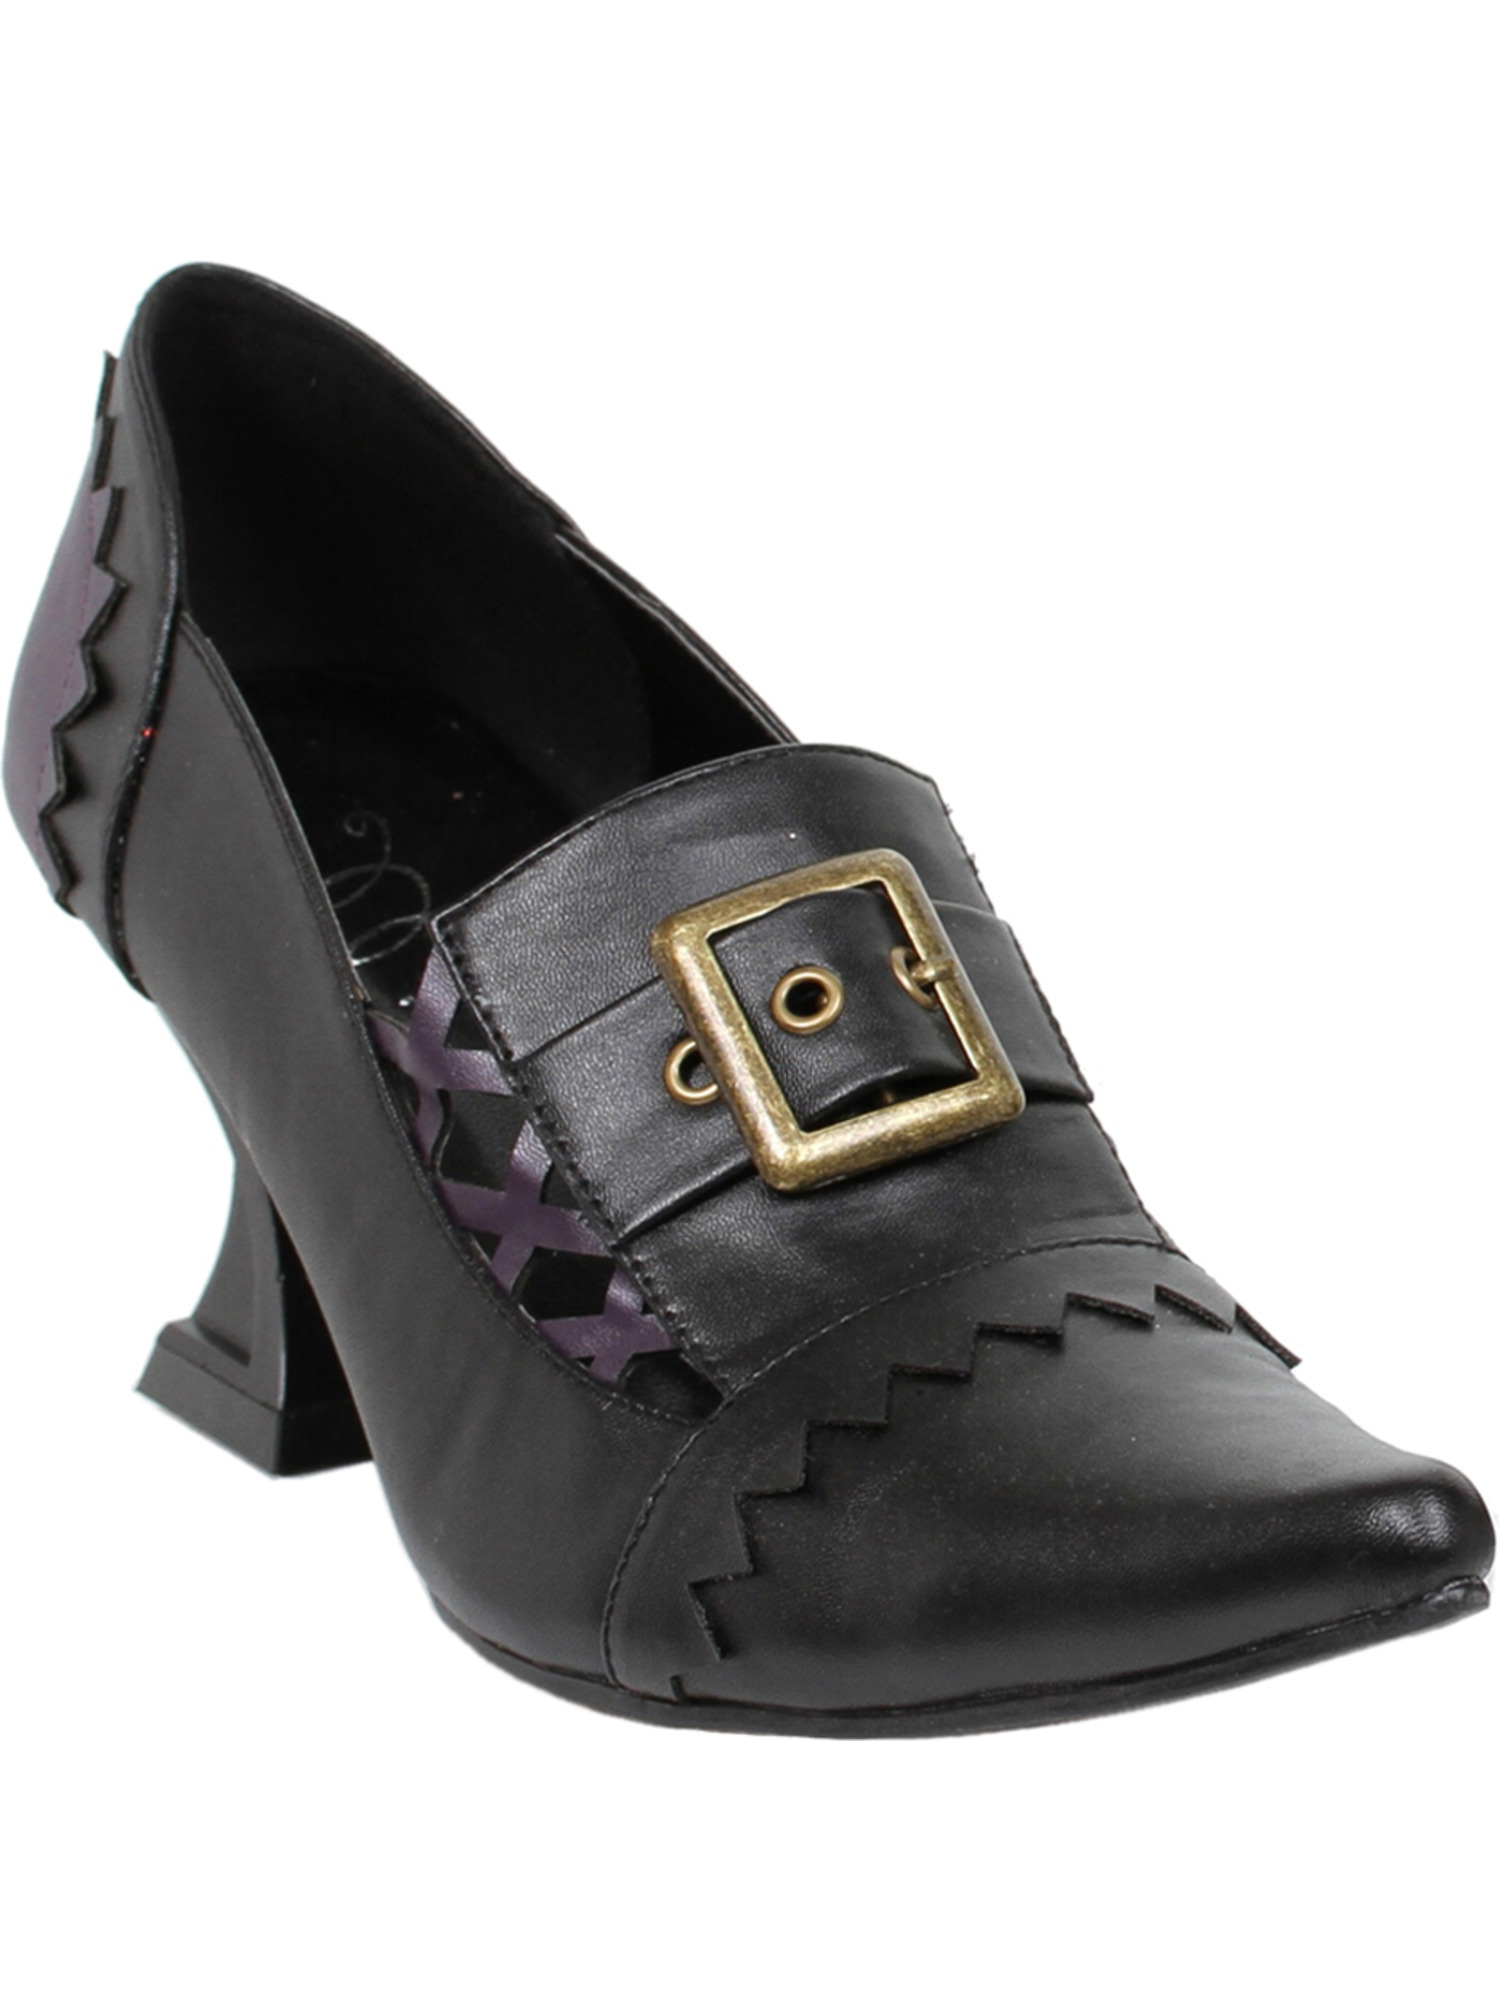 three inch black heels